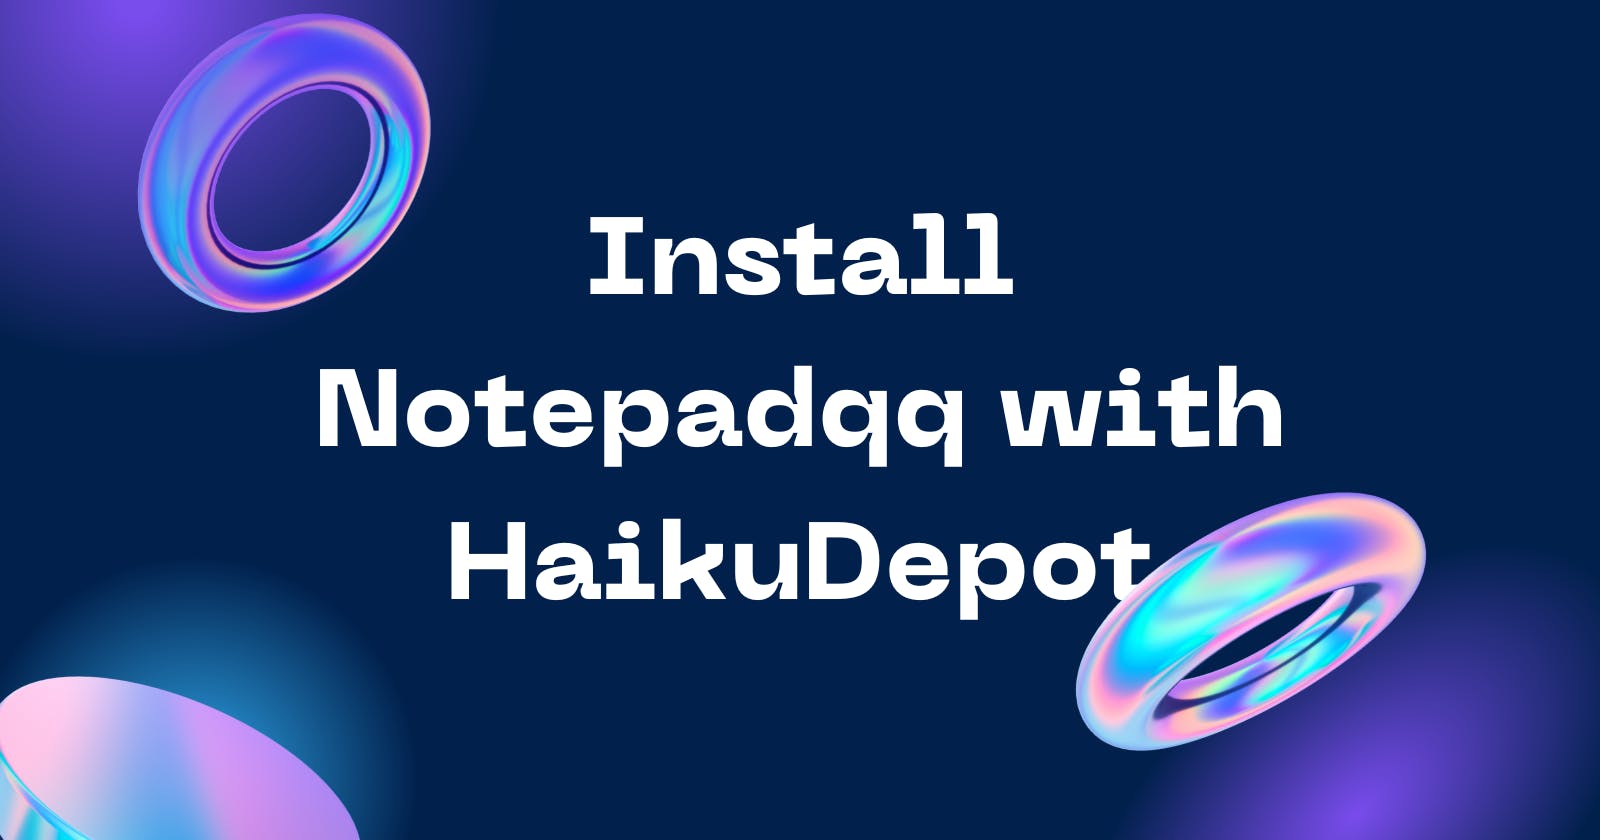 Install Notepadqq with HaikuDepot